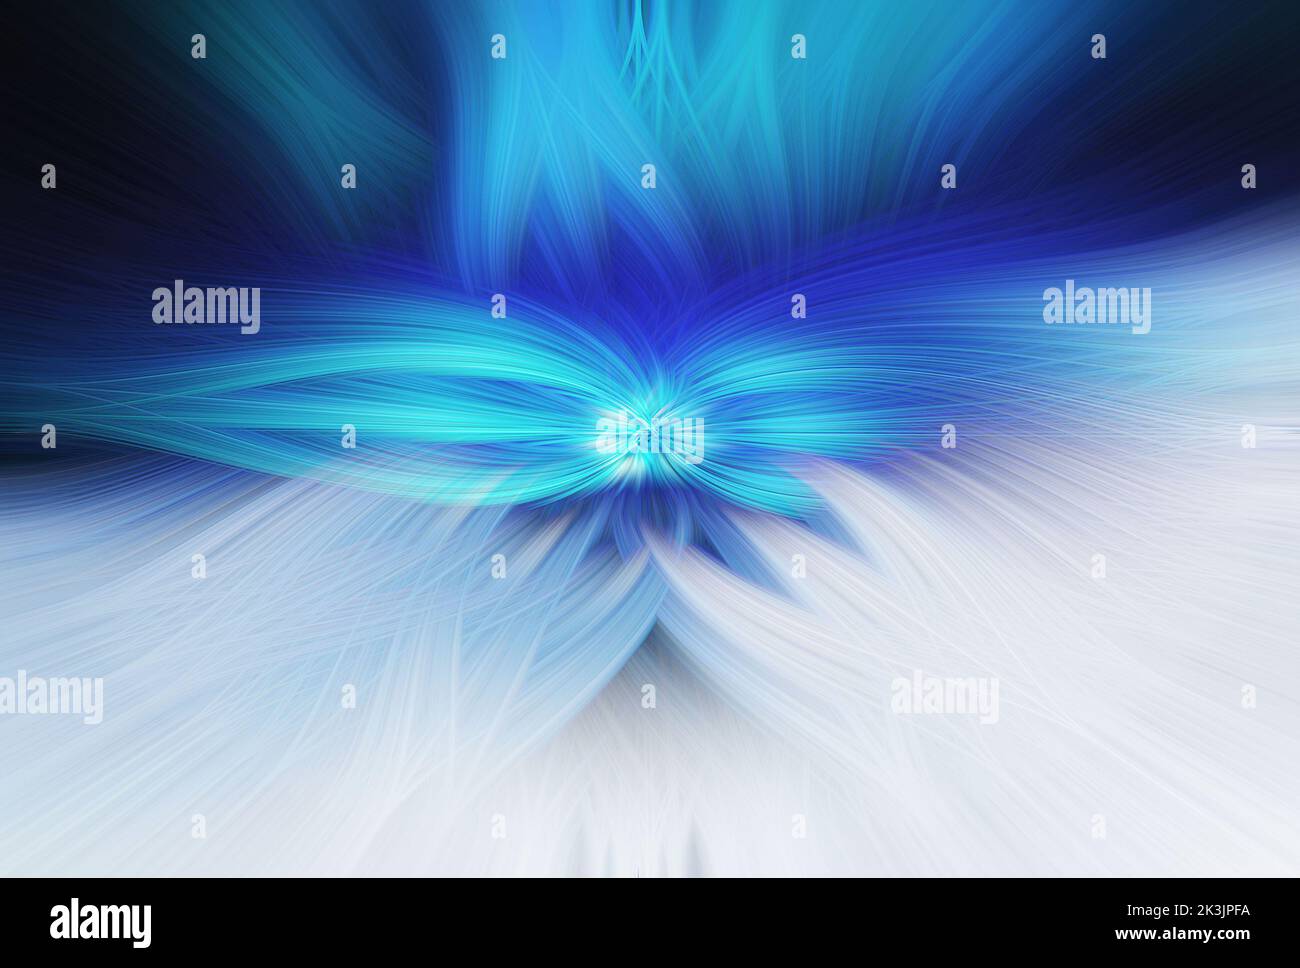 White Blue Abstract Hintergrund für Desktop, Mobile, Website, Social Media, Illustration, Banner, Poster, Drucke usw. Stockfoto